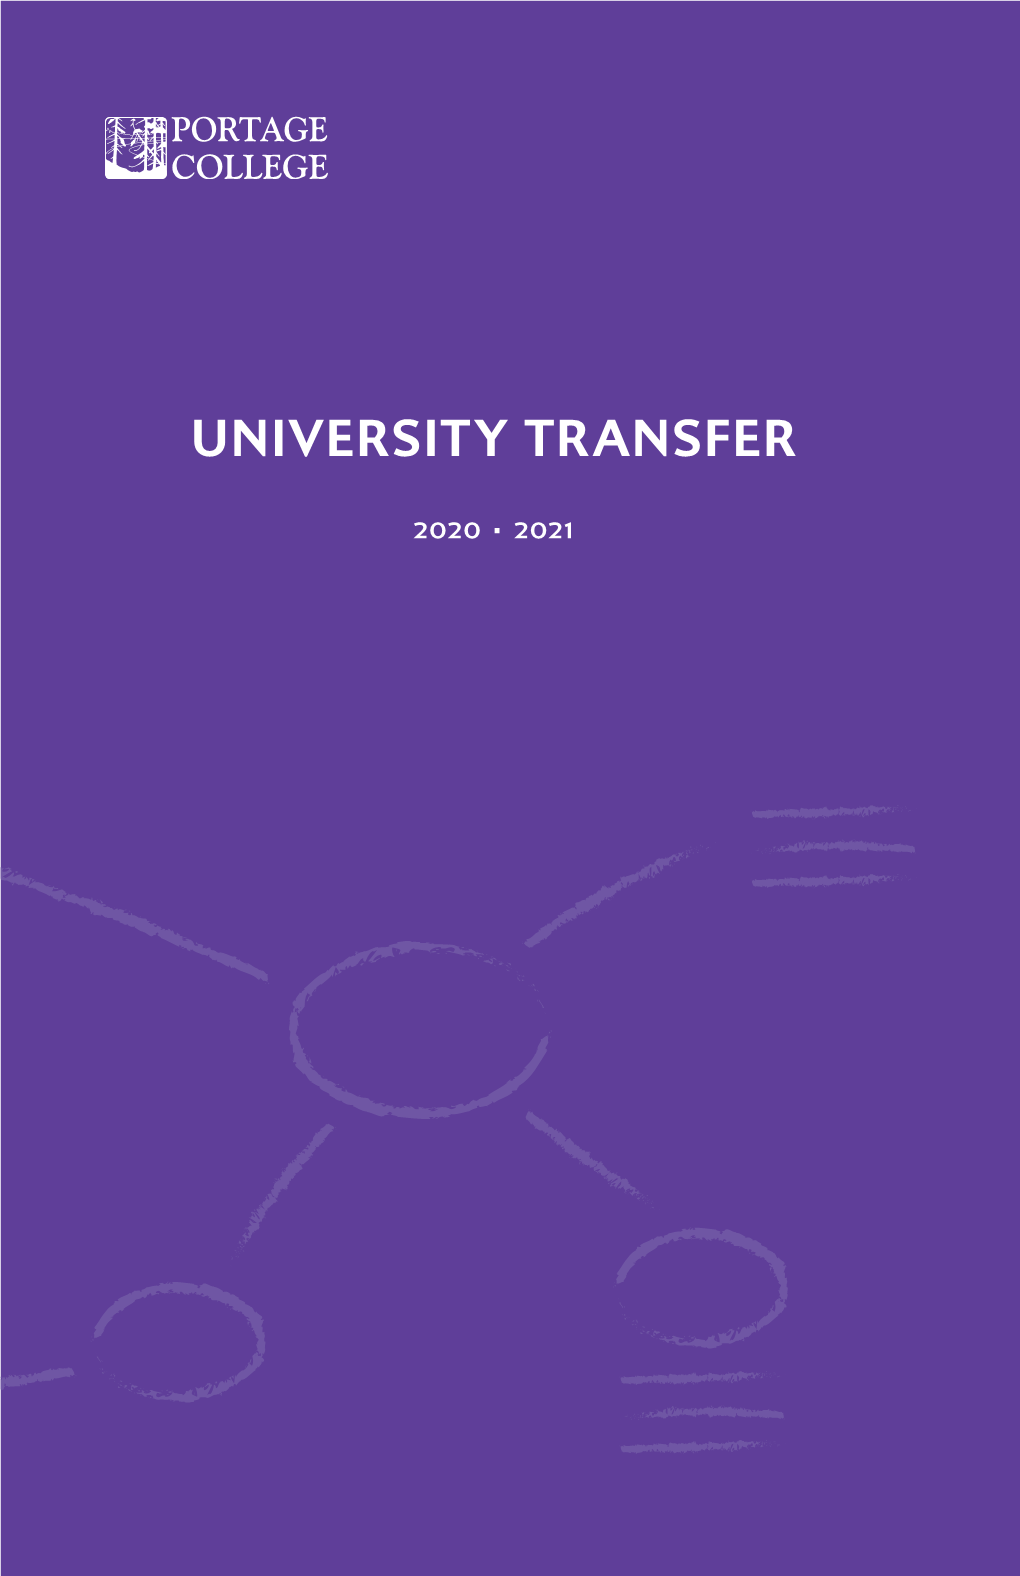 University Transfer